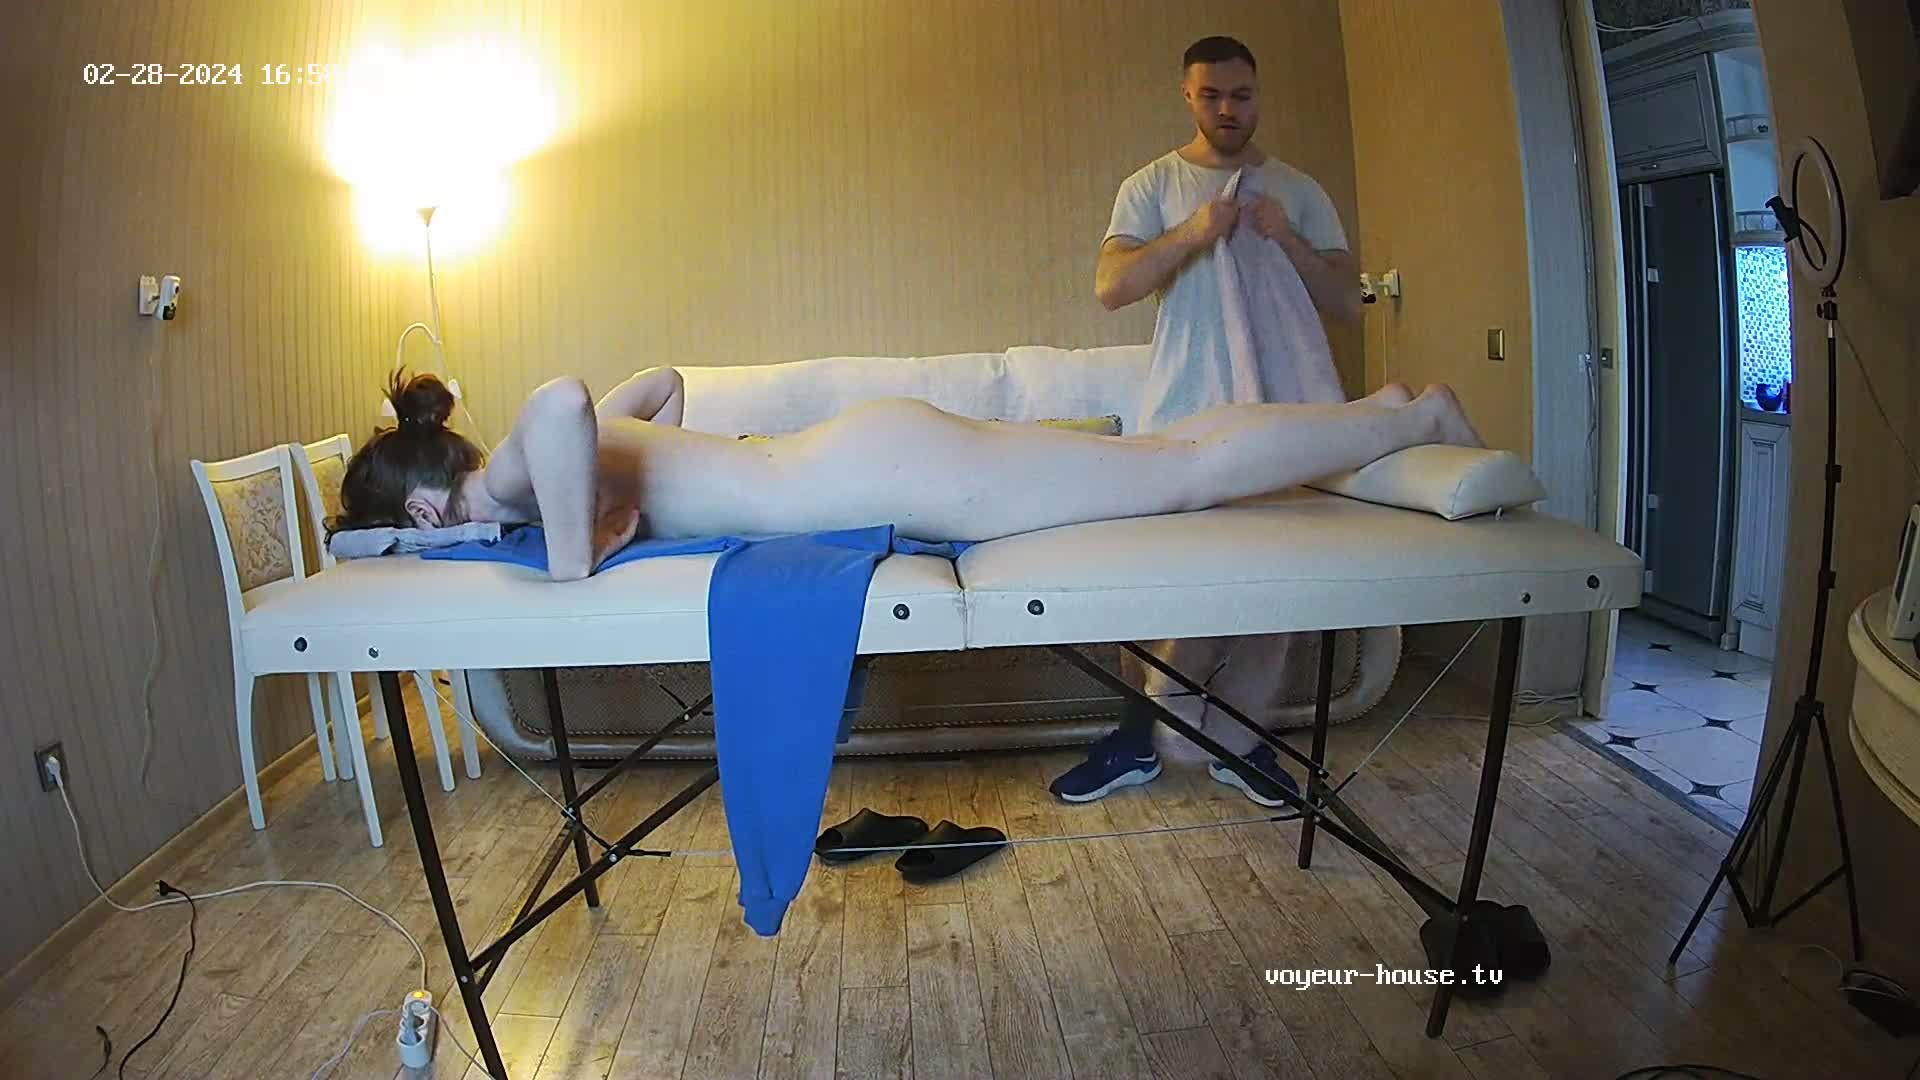 Kirill massaging Kacie, 28/02/2024